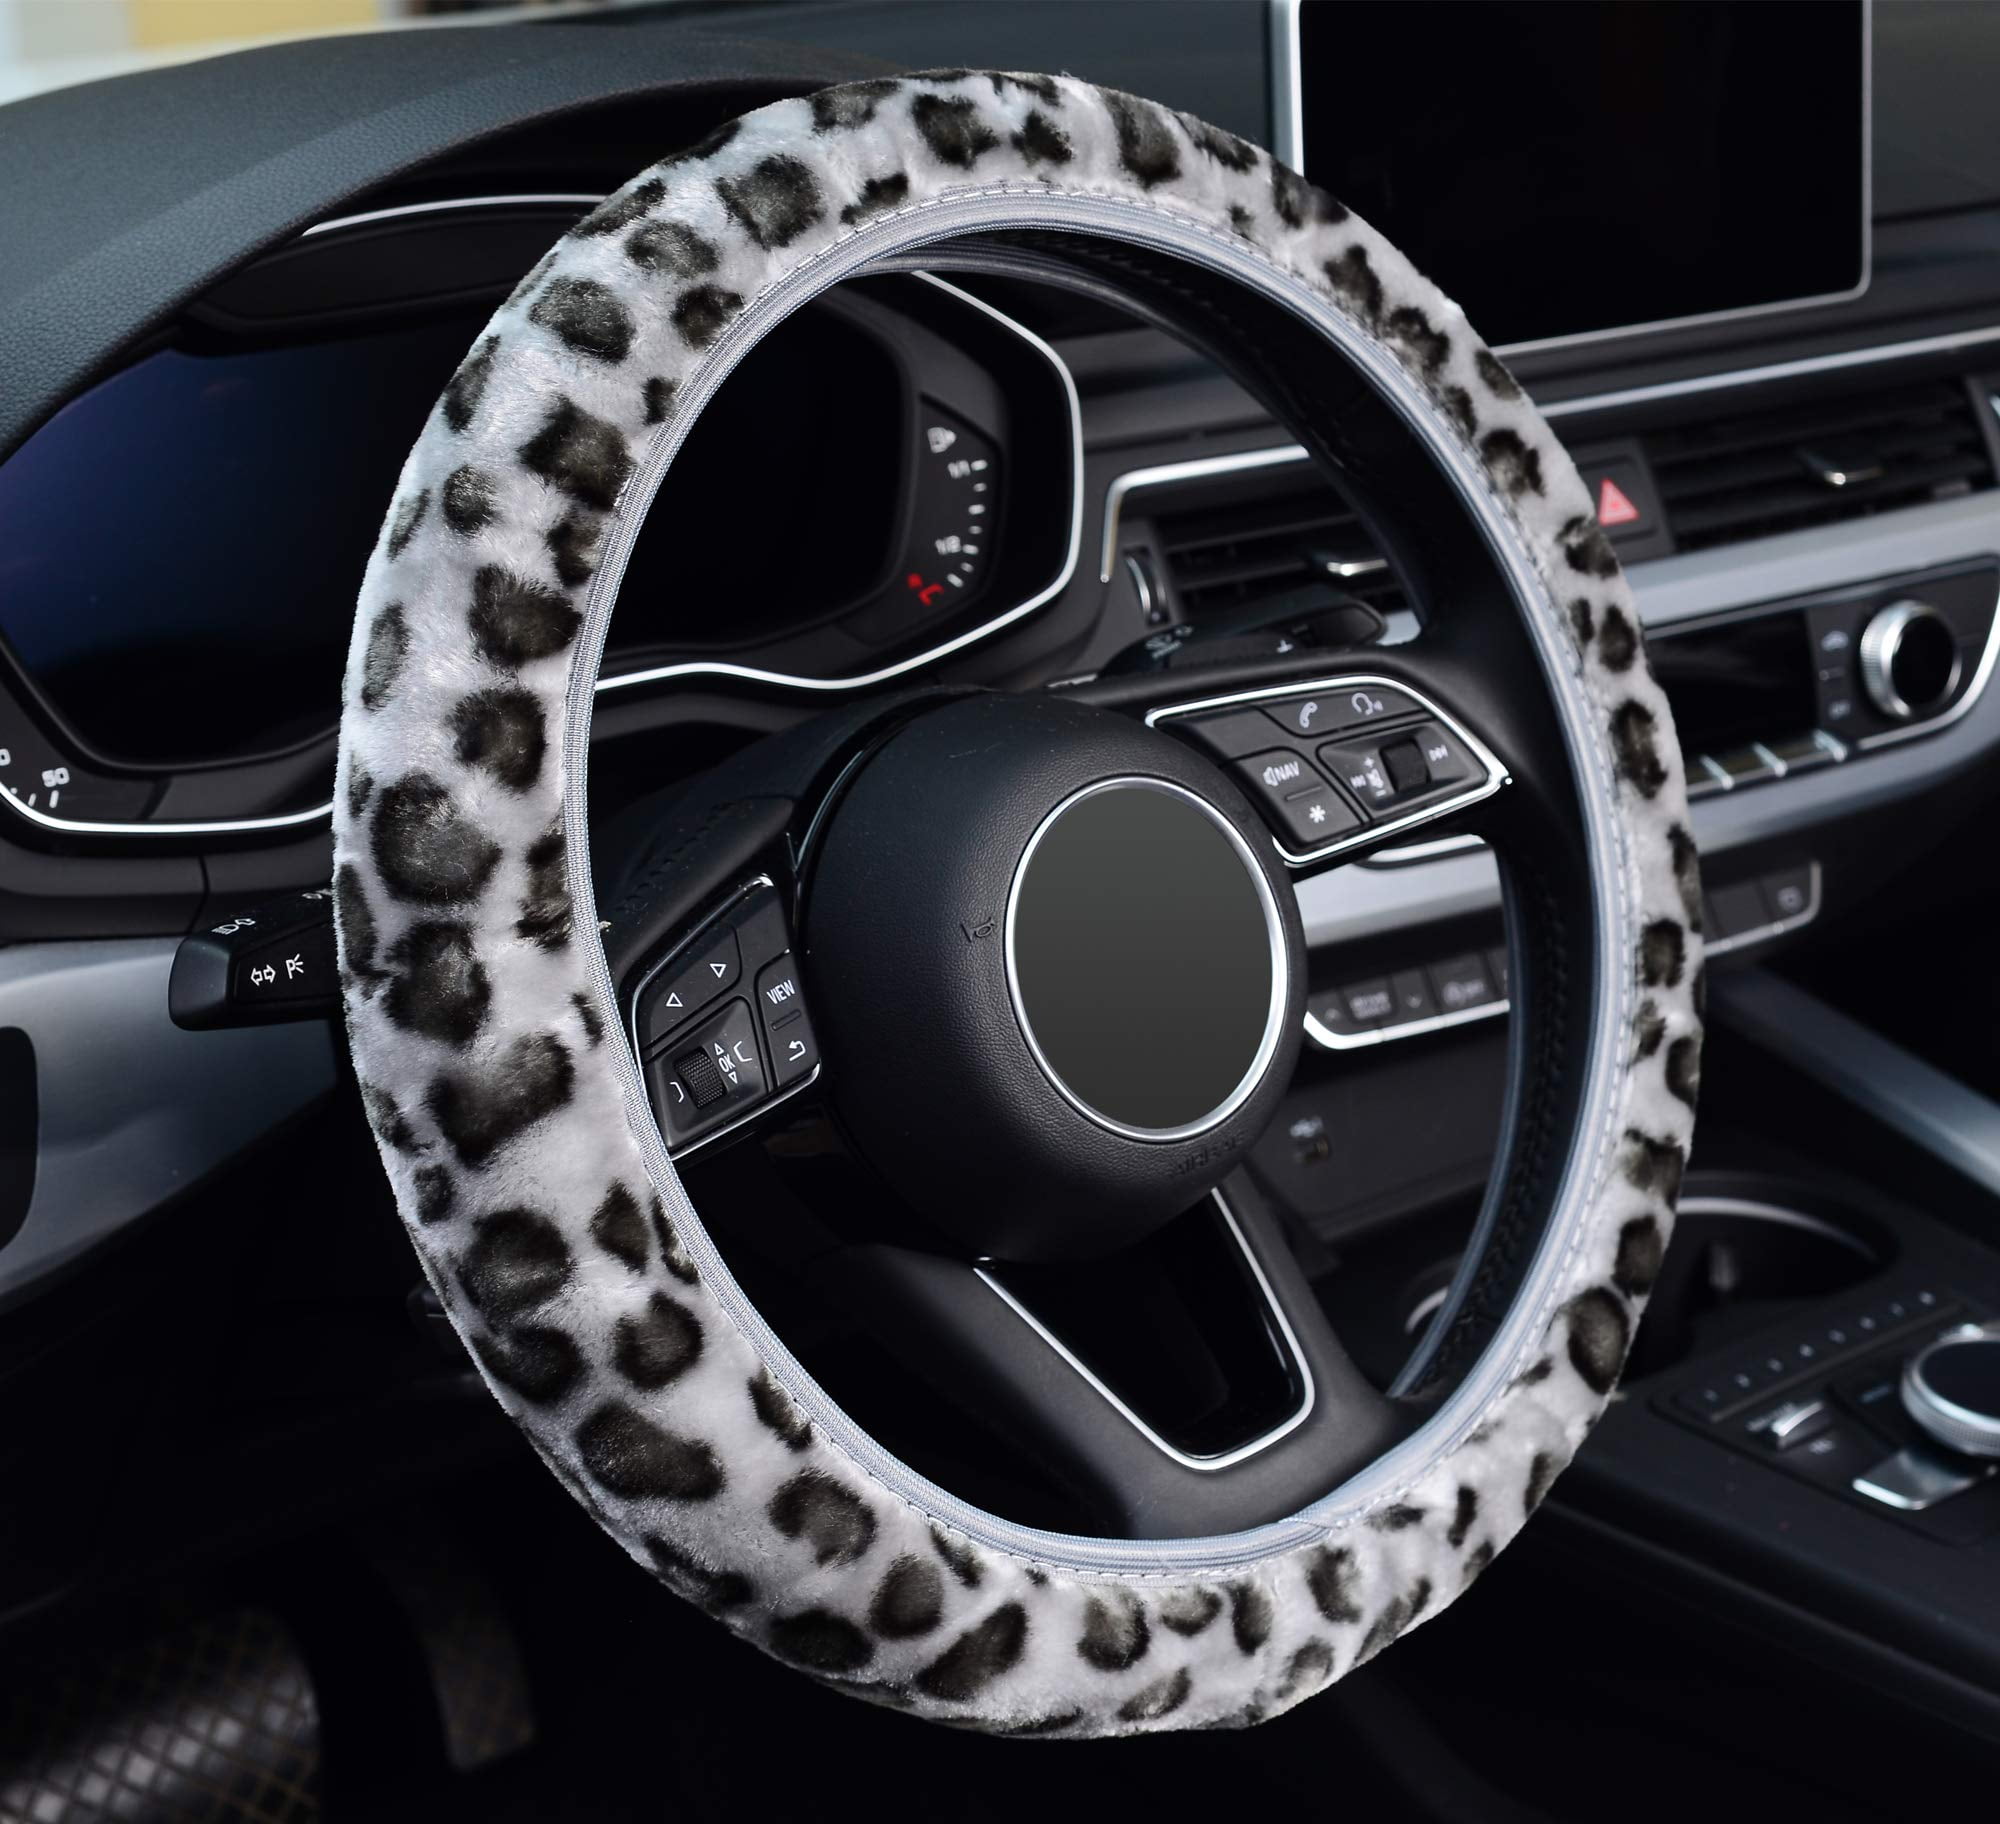 INEBIZ Luxury Leopard Print Fashionable Plush Car Steering Wheel Cover  ショップセレクト